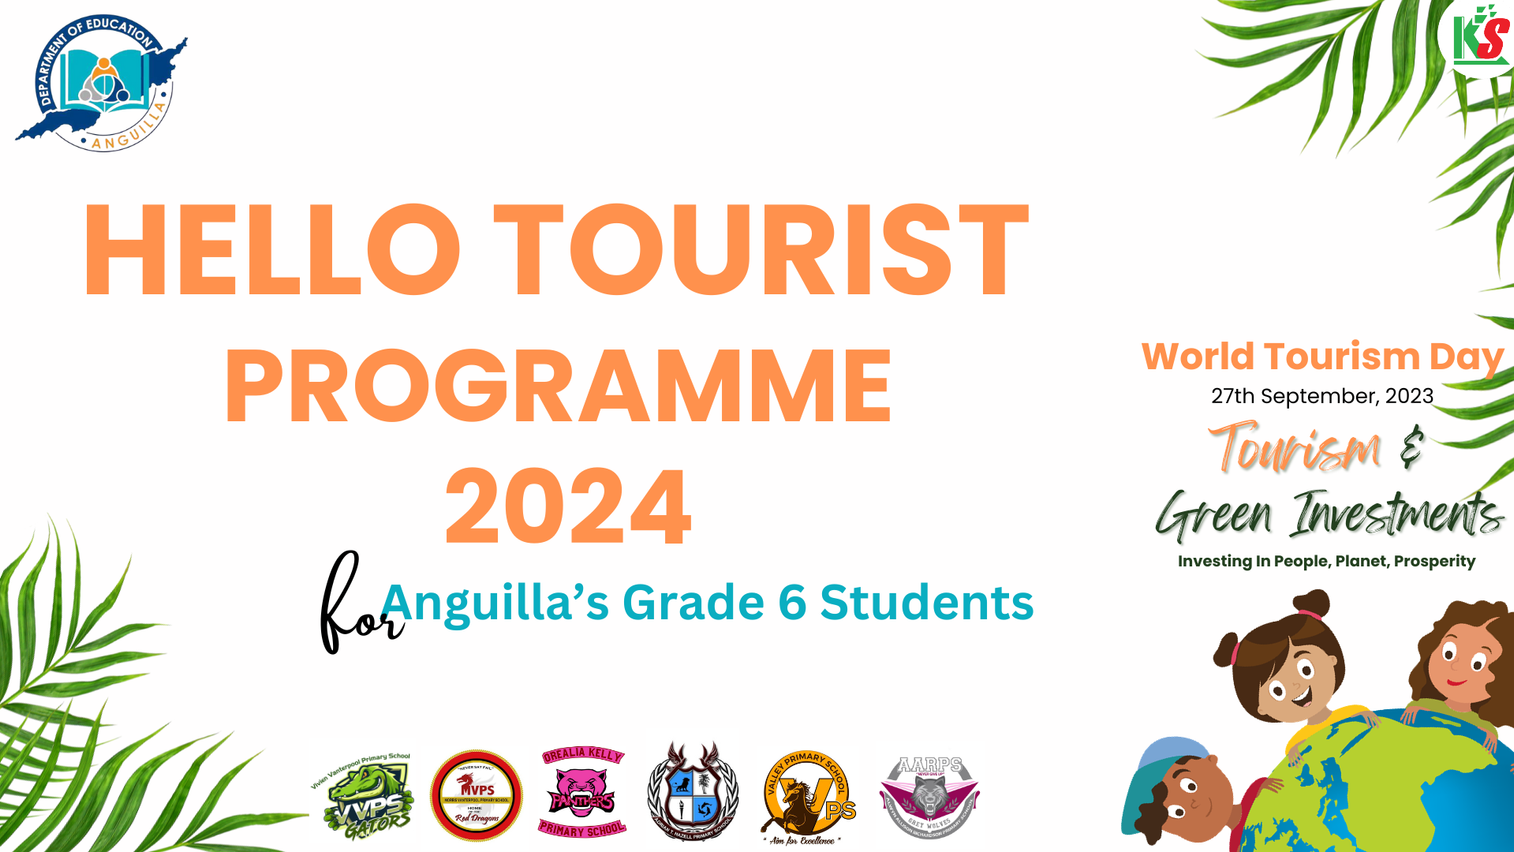 Launch of HELLO TOURIST PROGRAMME 2024